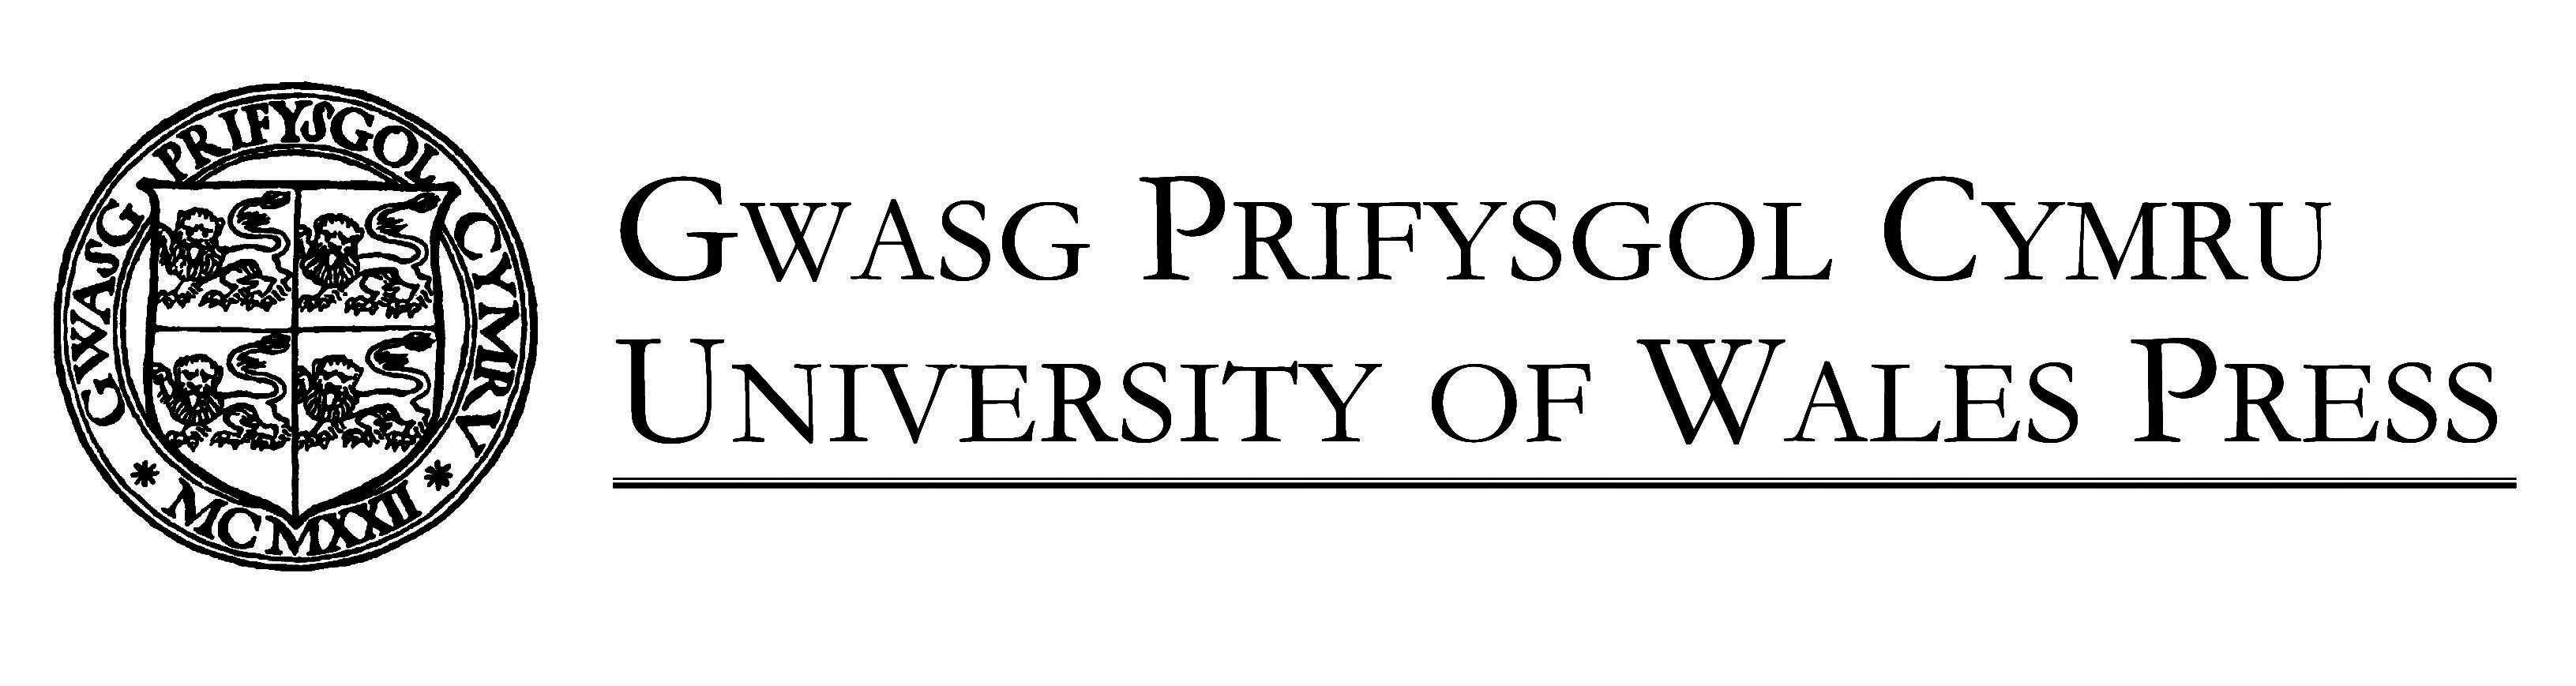 University of Wales Press